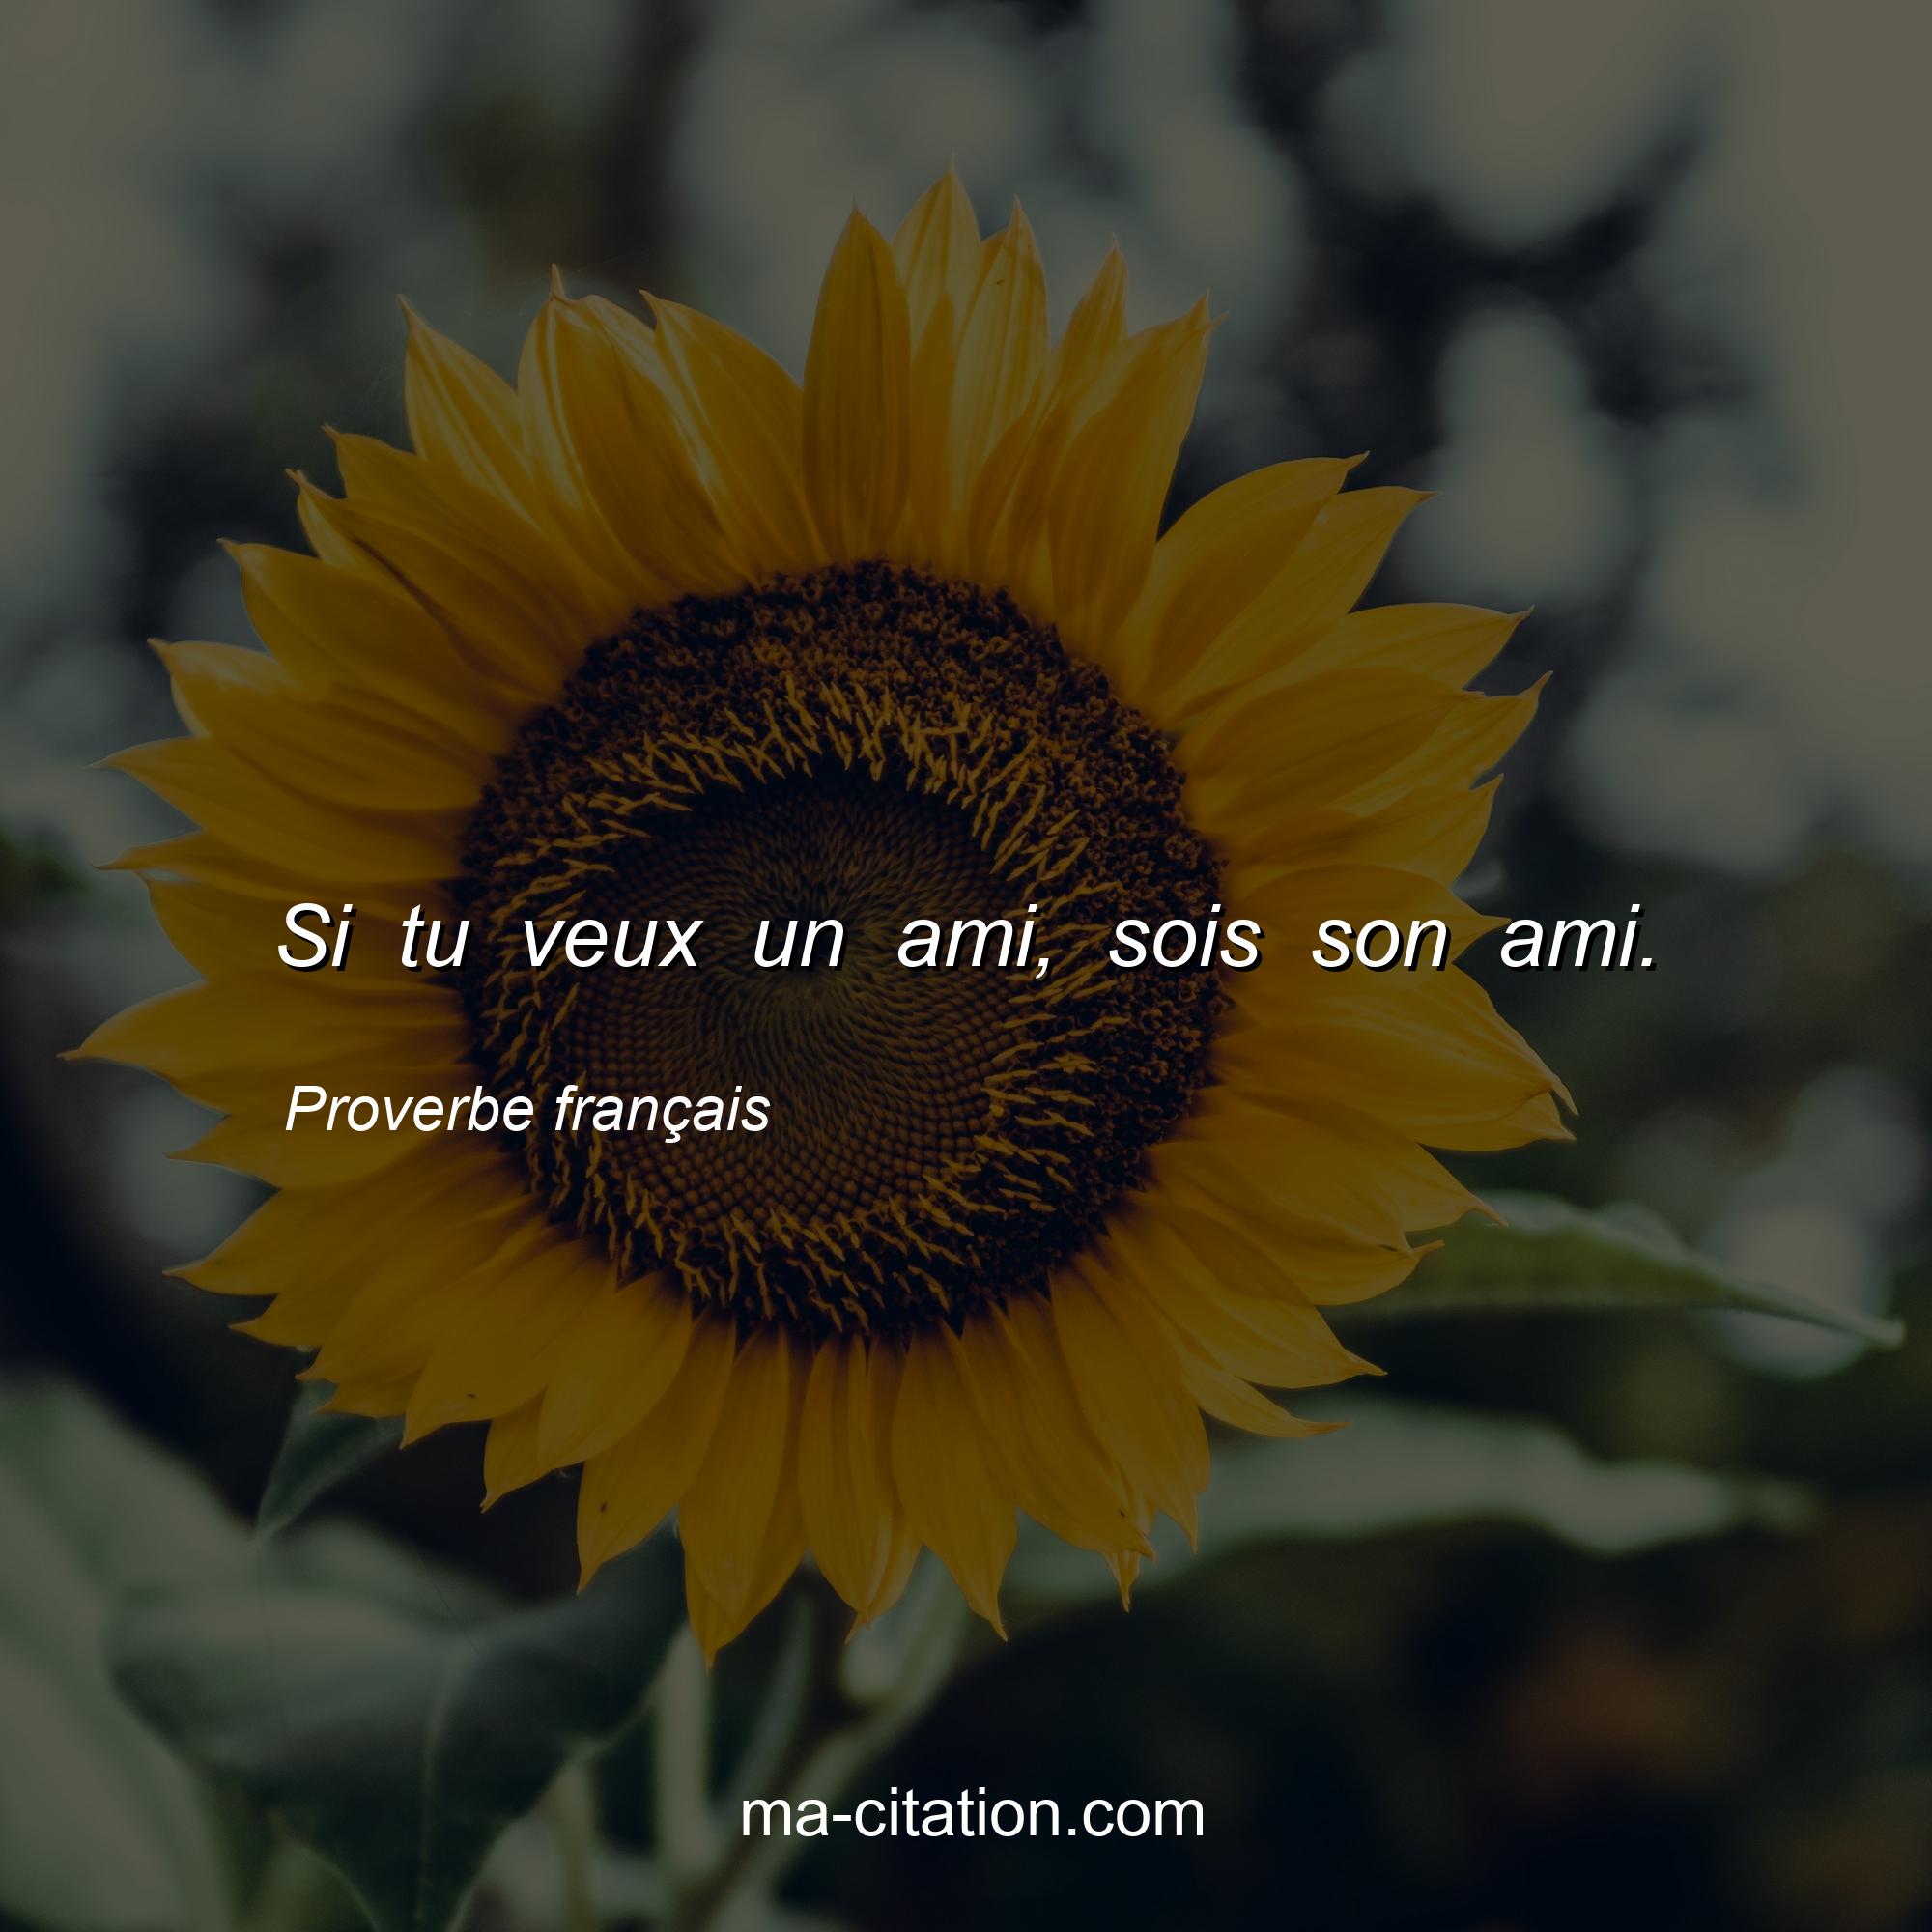 Proverbe français : Si tu veux un ami, sois son ami.